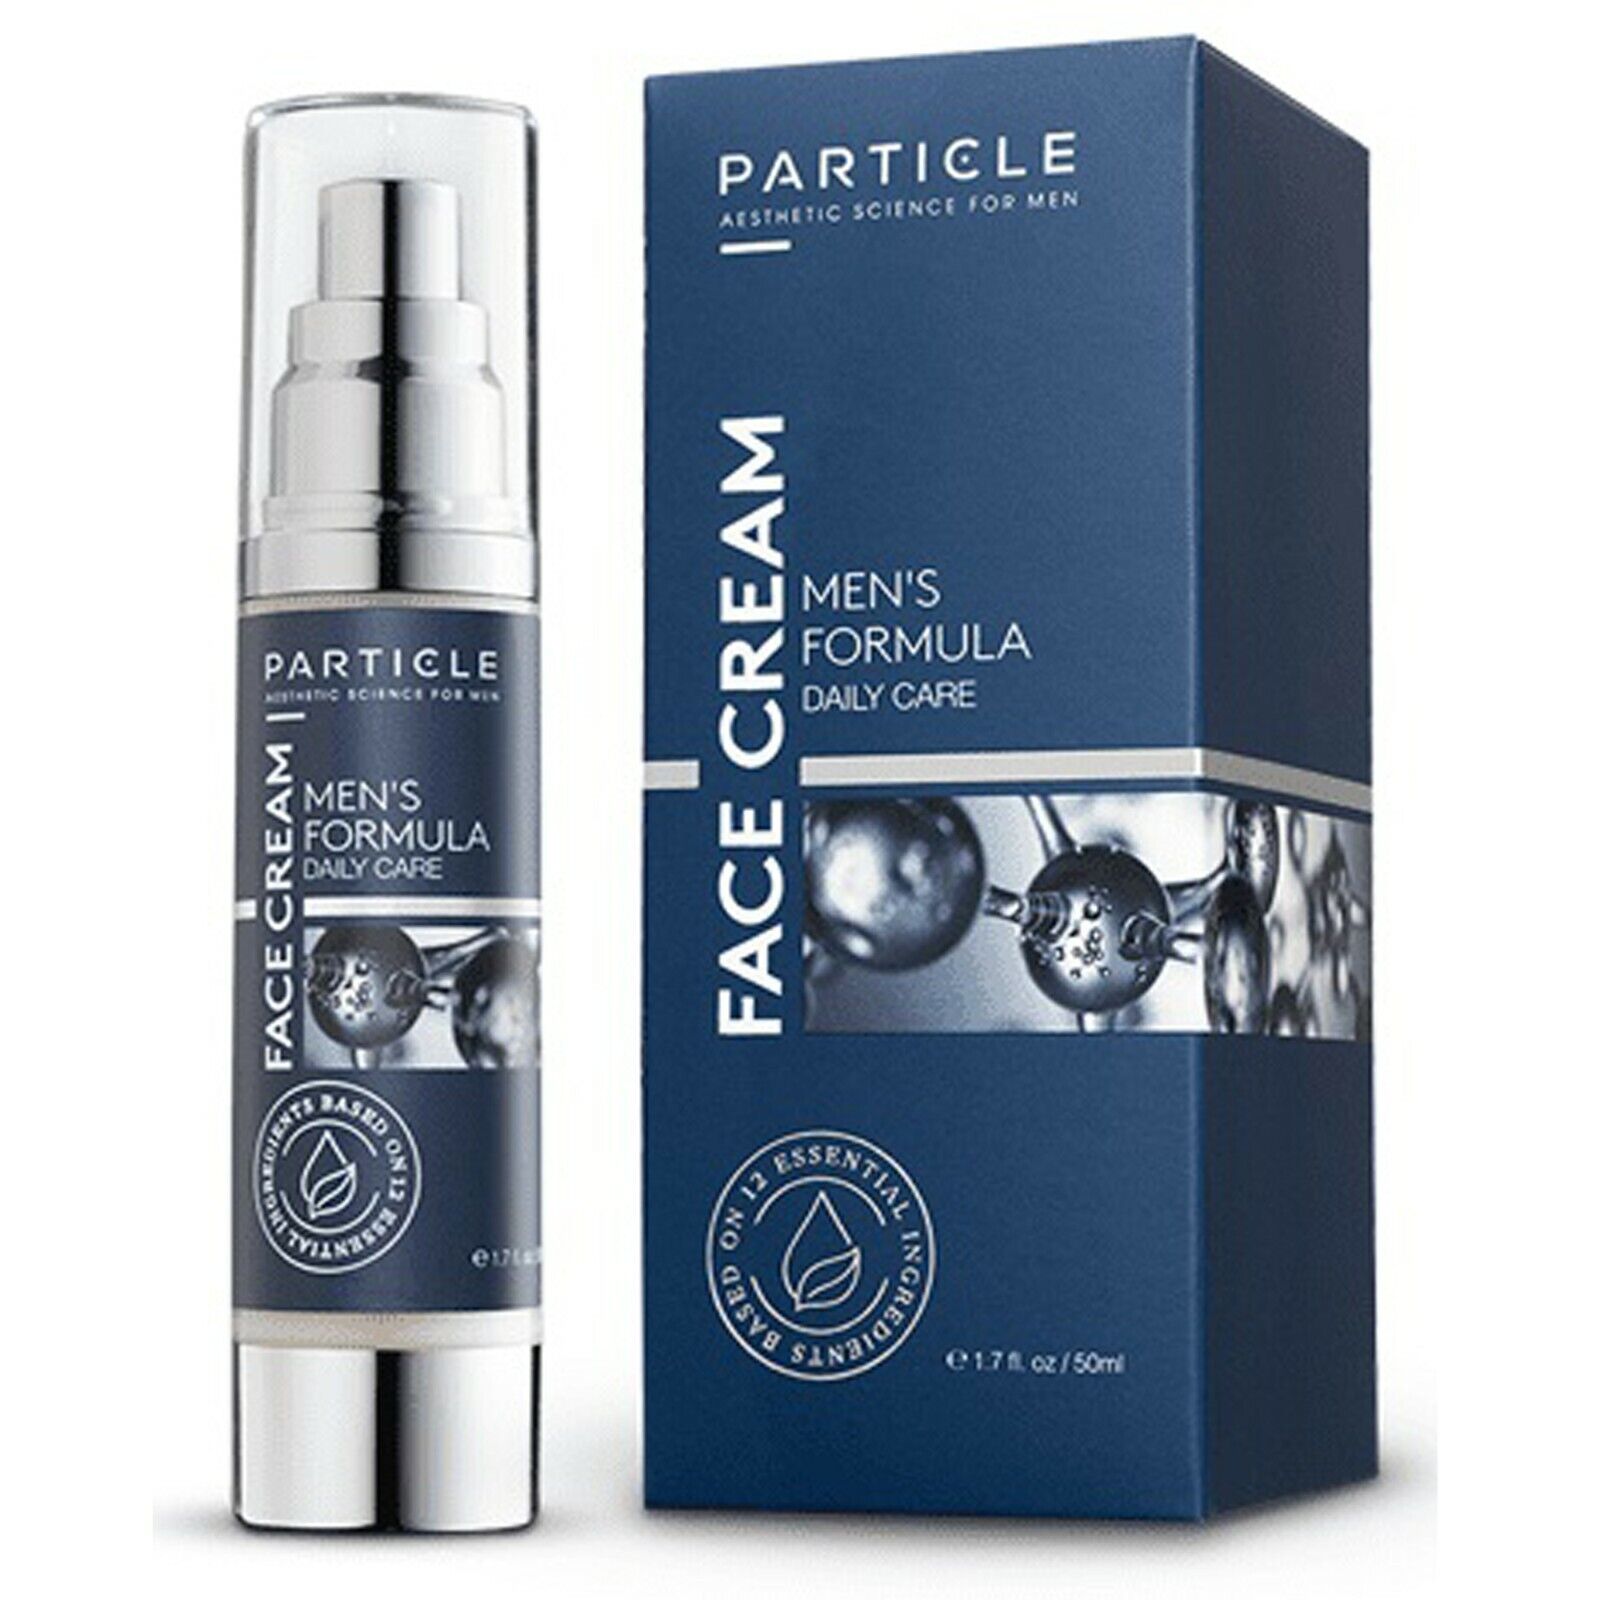 Particle Men's Formula Face Cream 6-in-1 Anti-aging 1.7oz Daily Skin Care